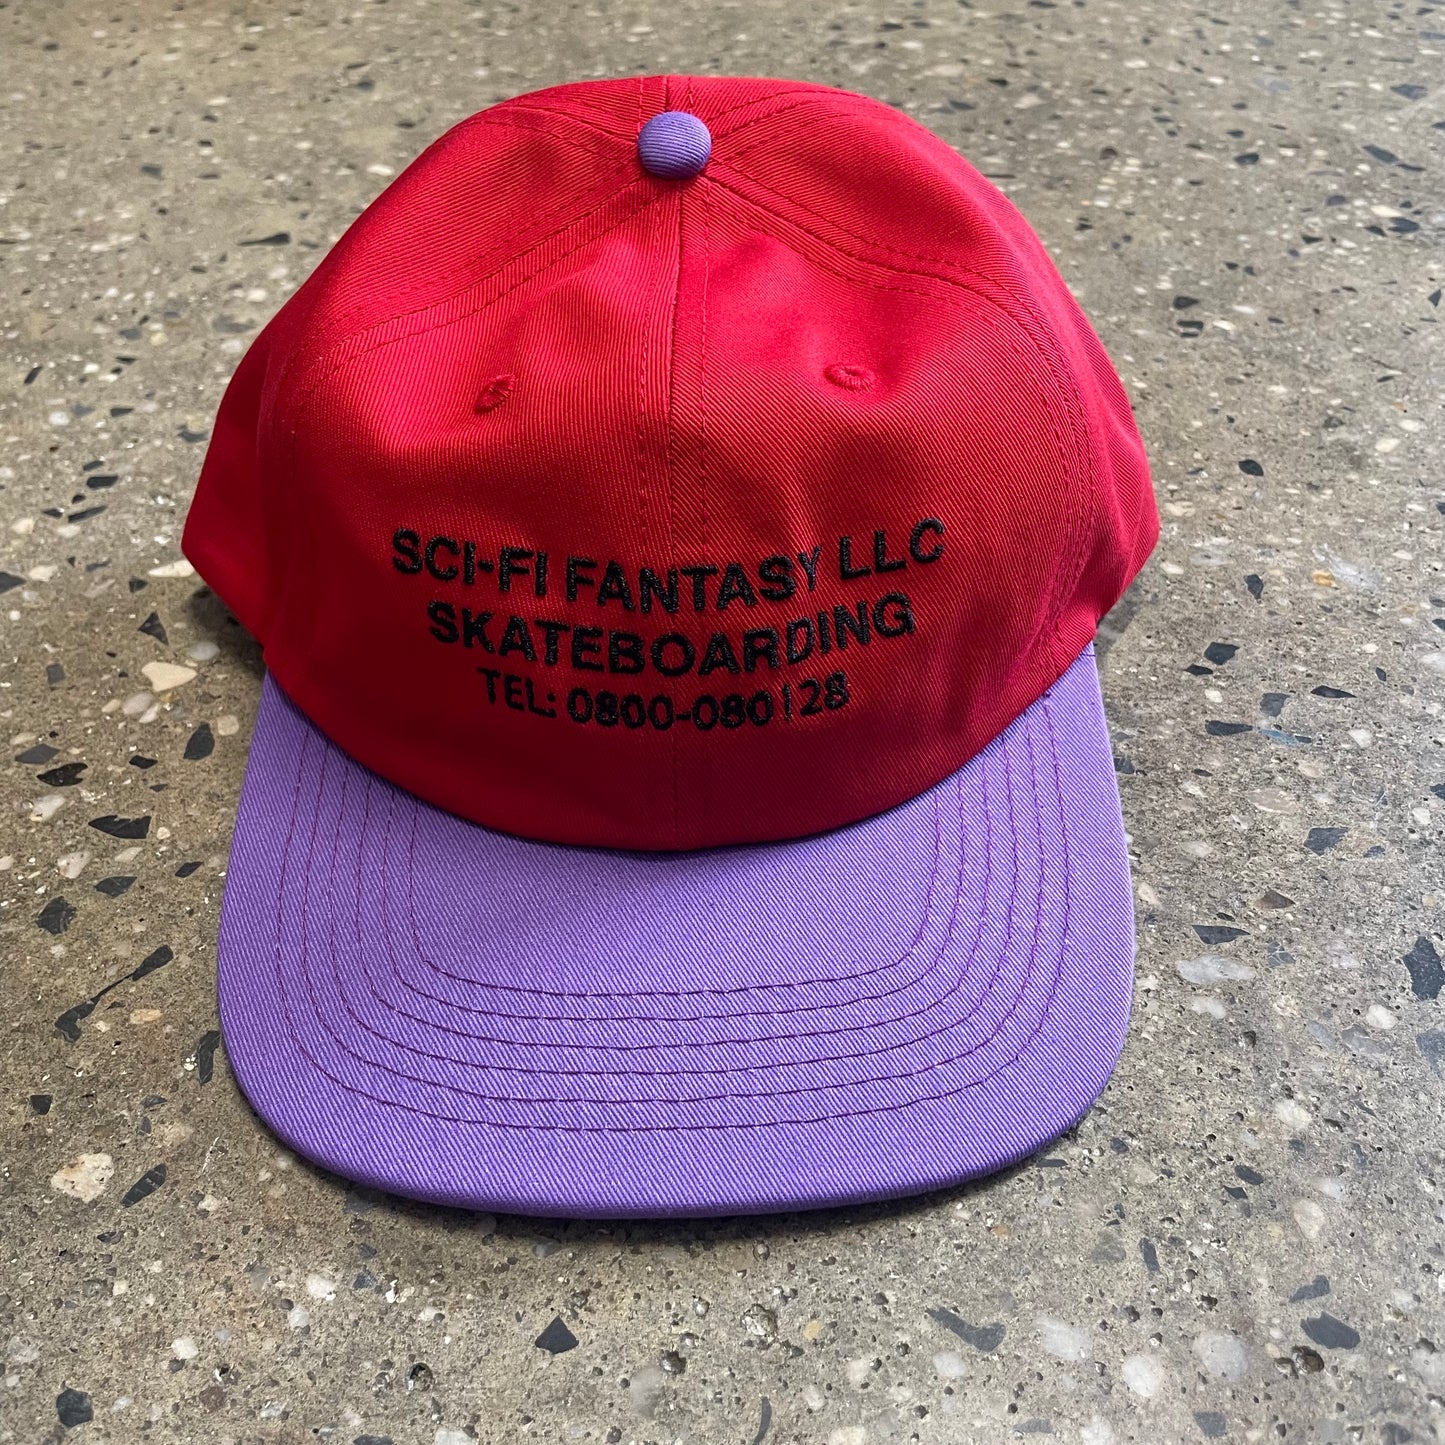 Sci-Fi Fantasy Business Post Hat - Red/Violet